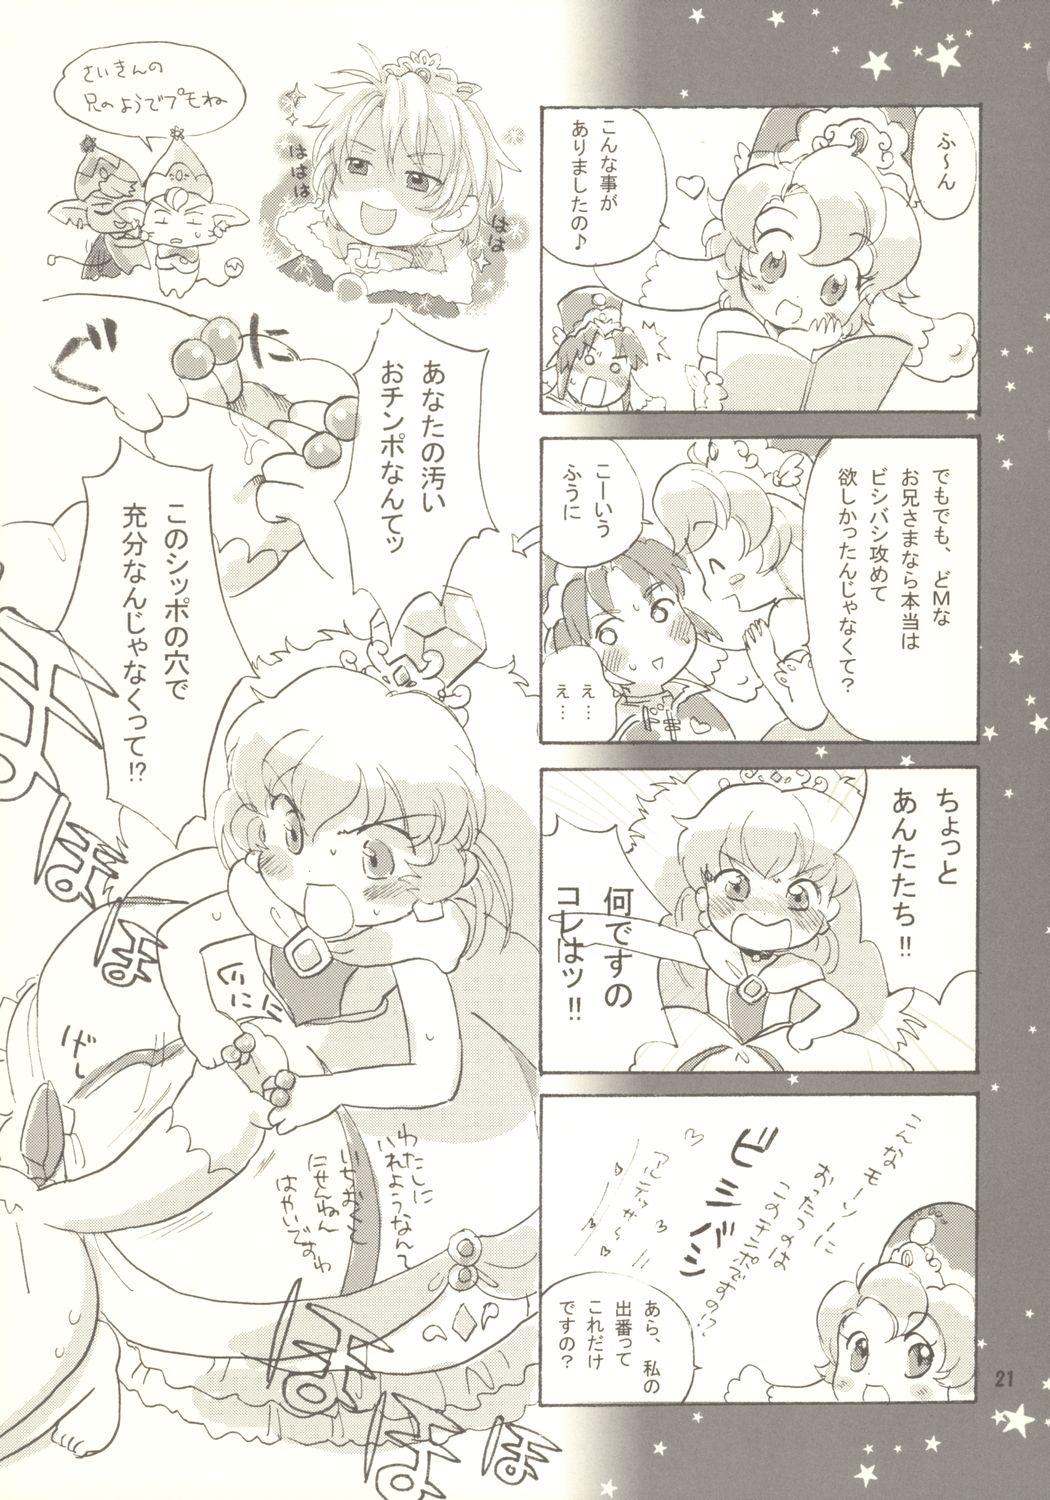 Pounded Egao ni Nare - Please give me smiling face - Fushigiboshi no futagohime Asia - Page 20